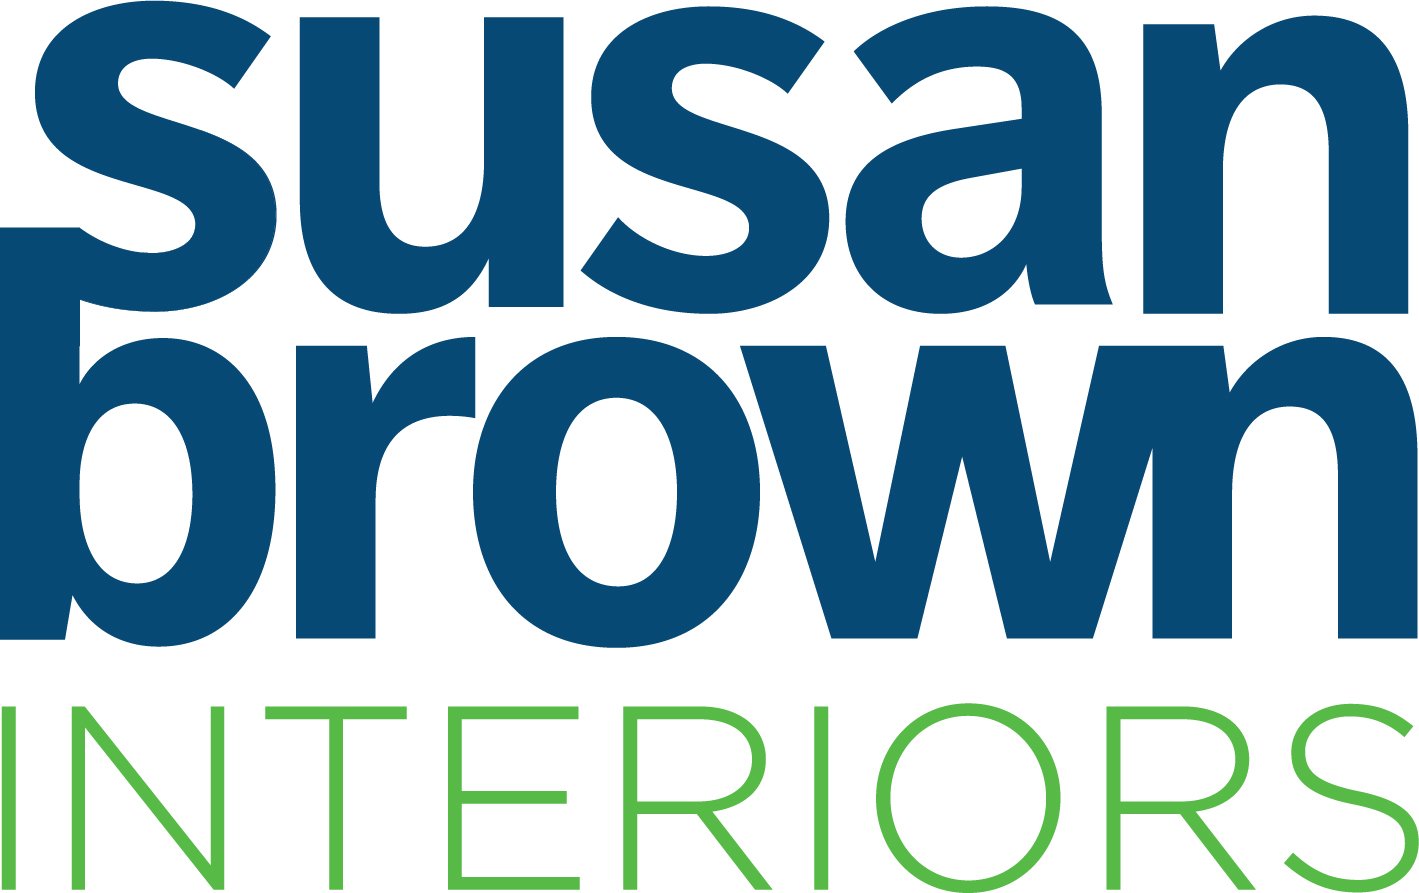 Susan Brown Interiors